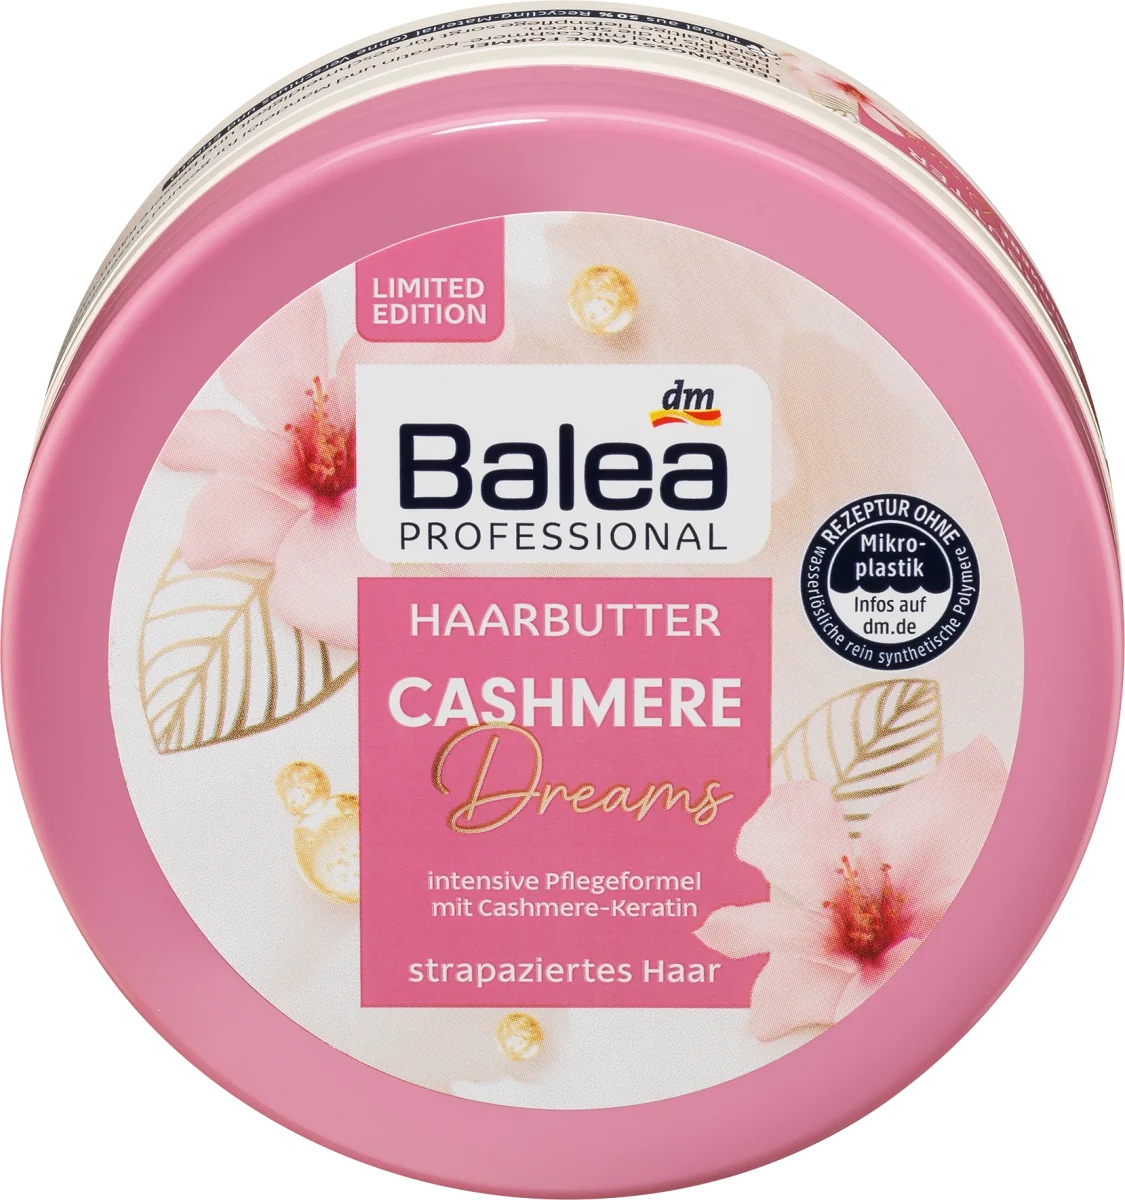 Balea Professional Cashmere Dreams Haarbutter